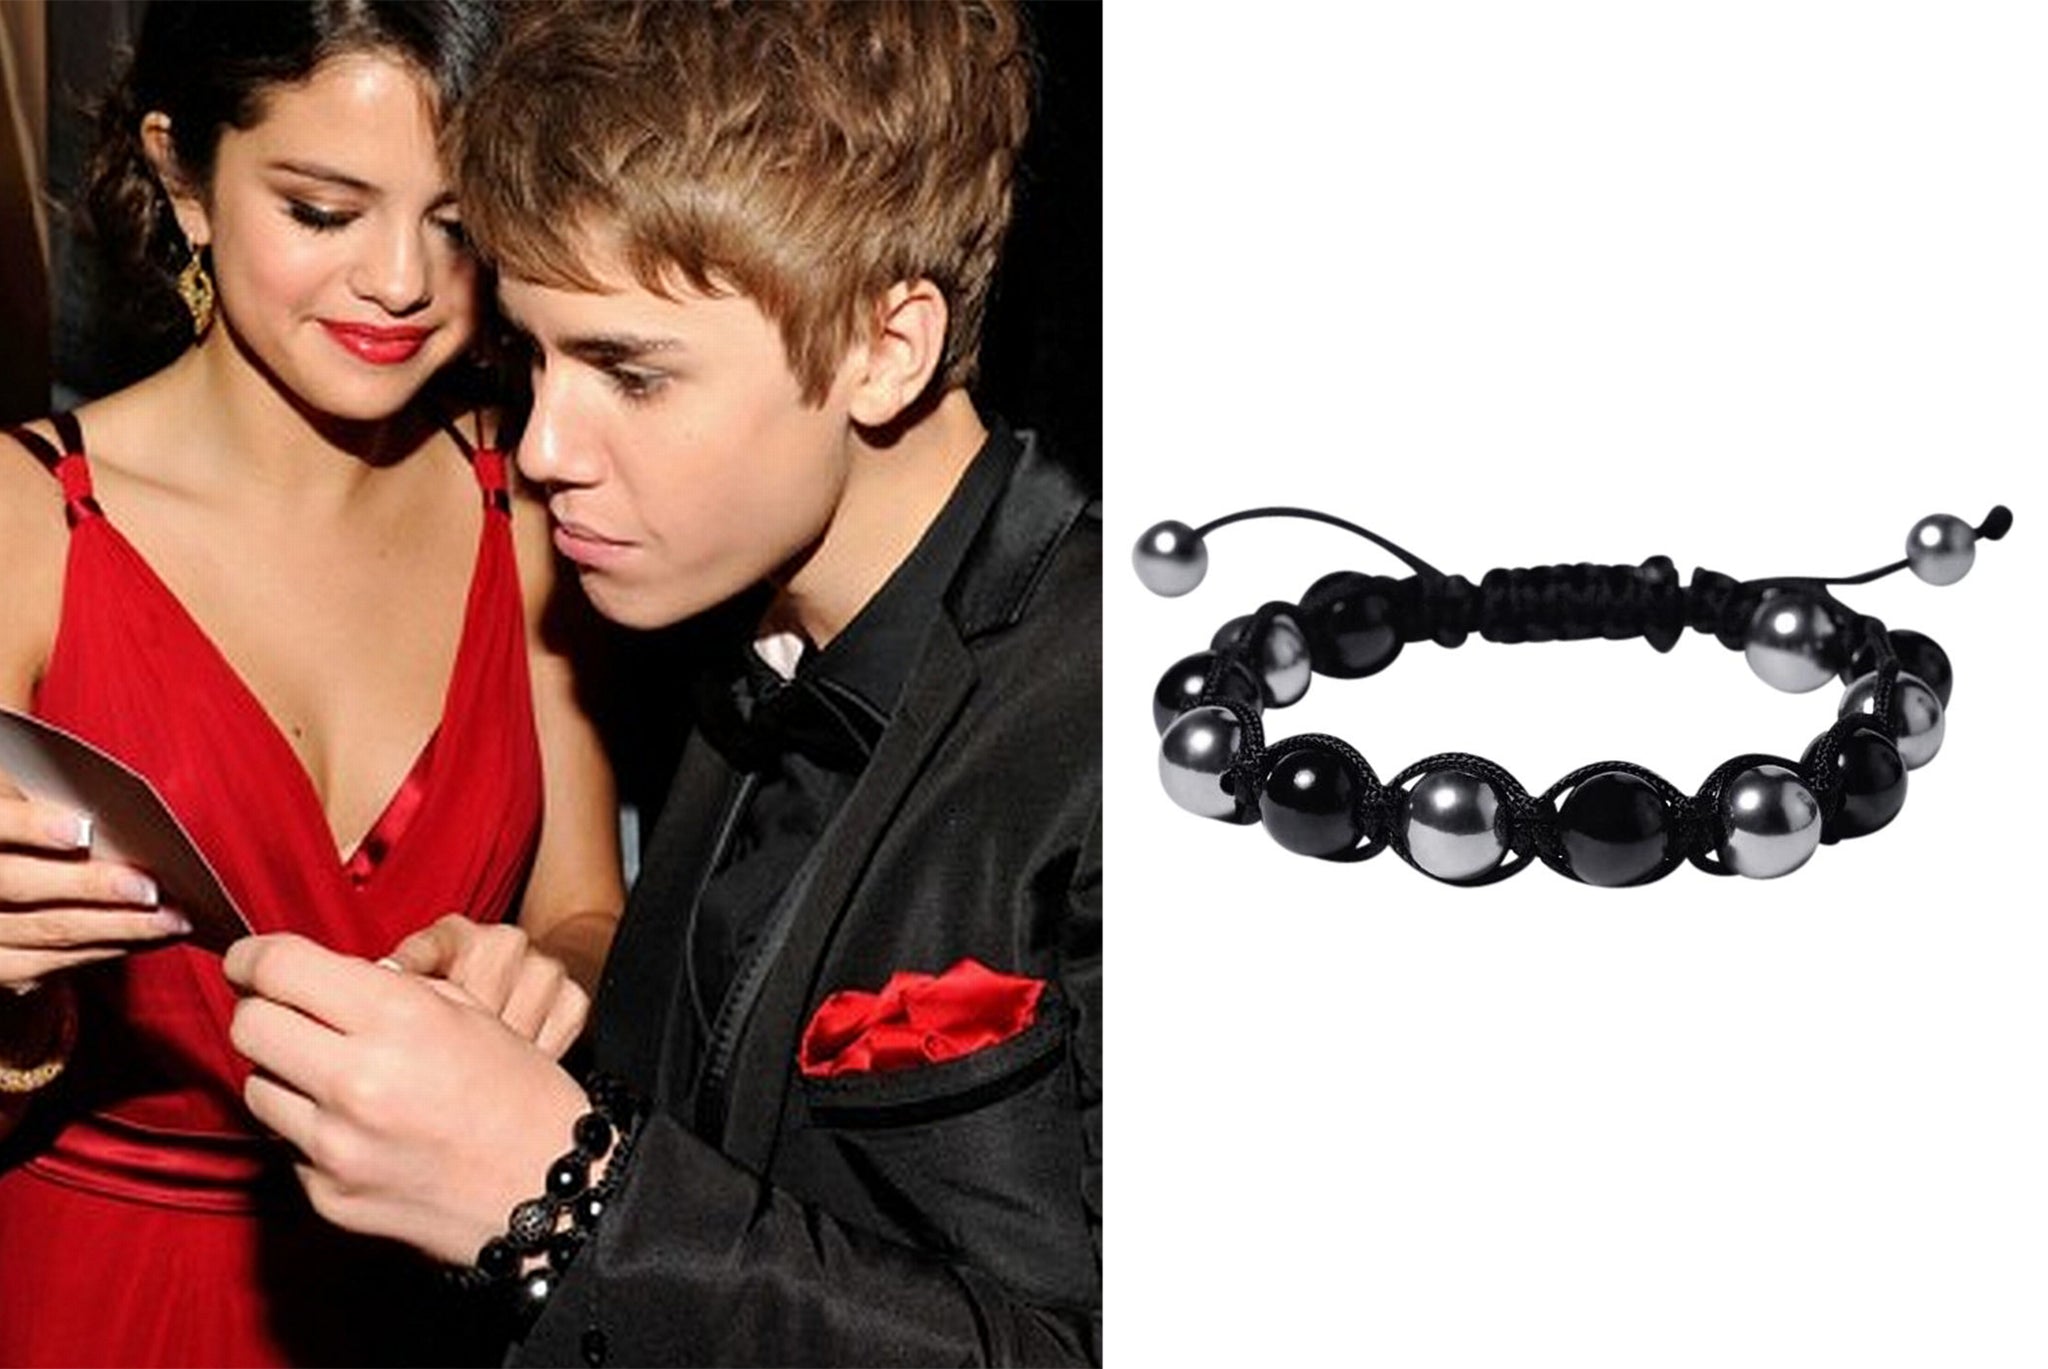 Shamballa Bead Bracelet worn by Justin Bieber